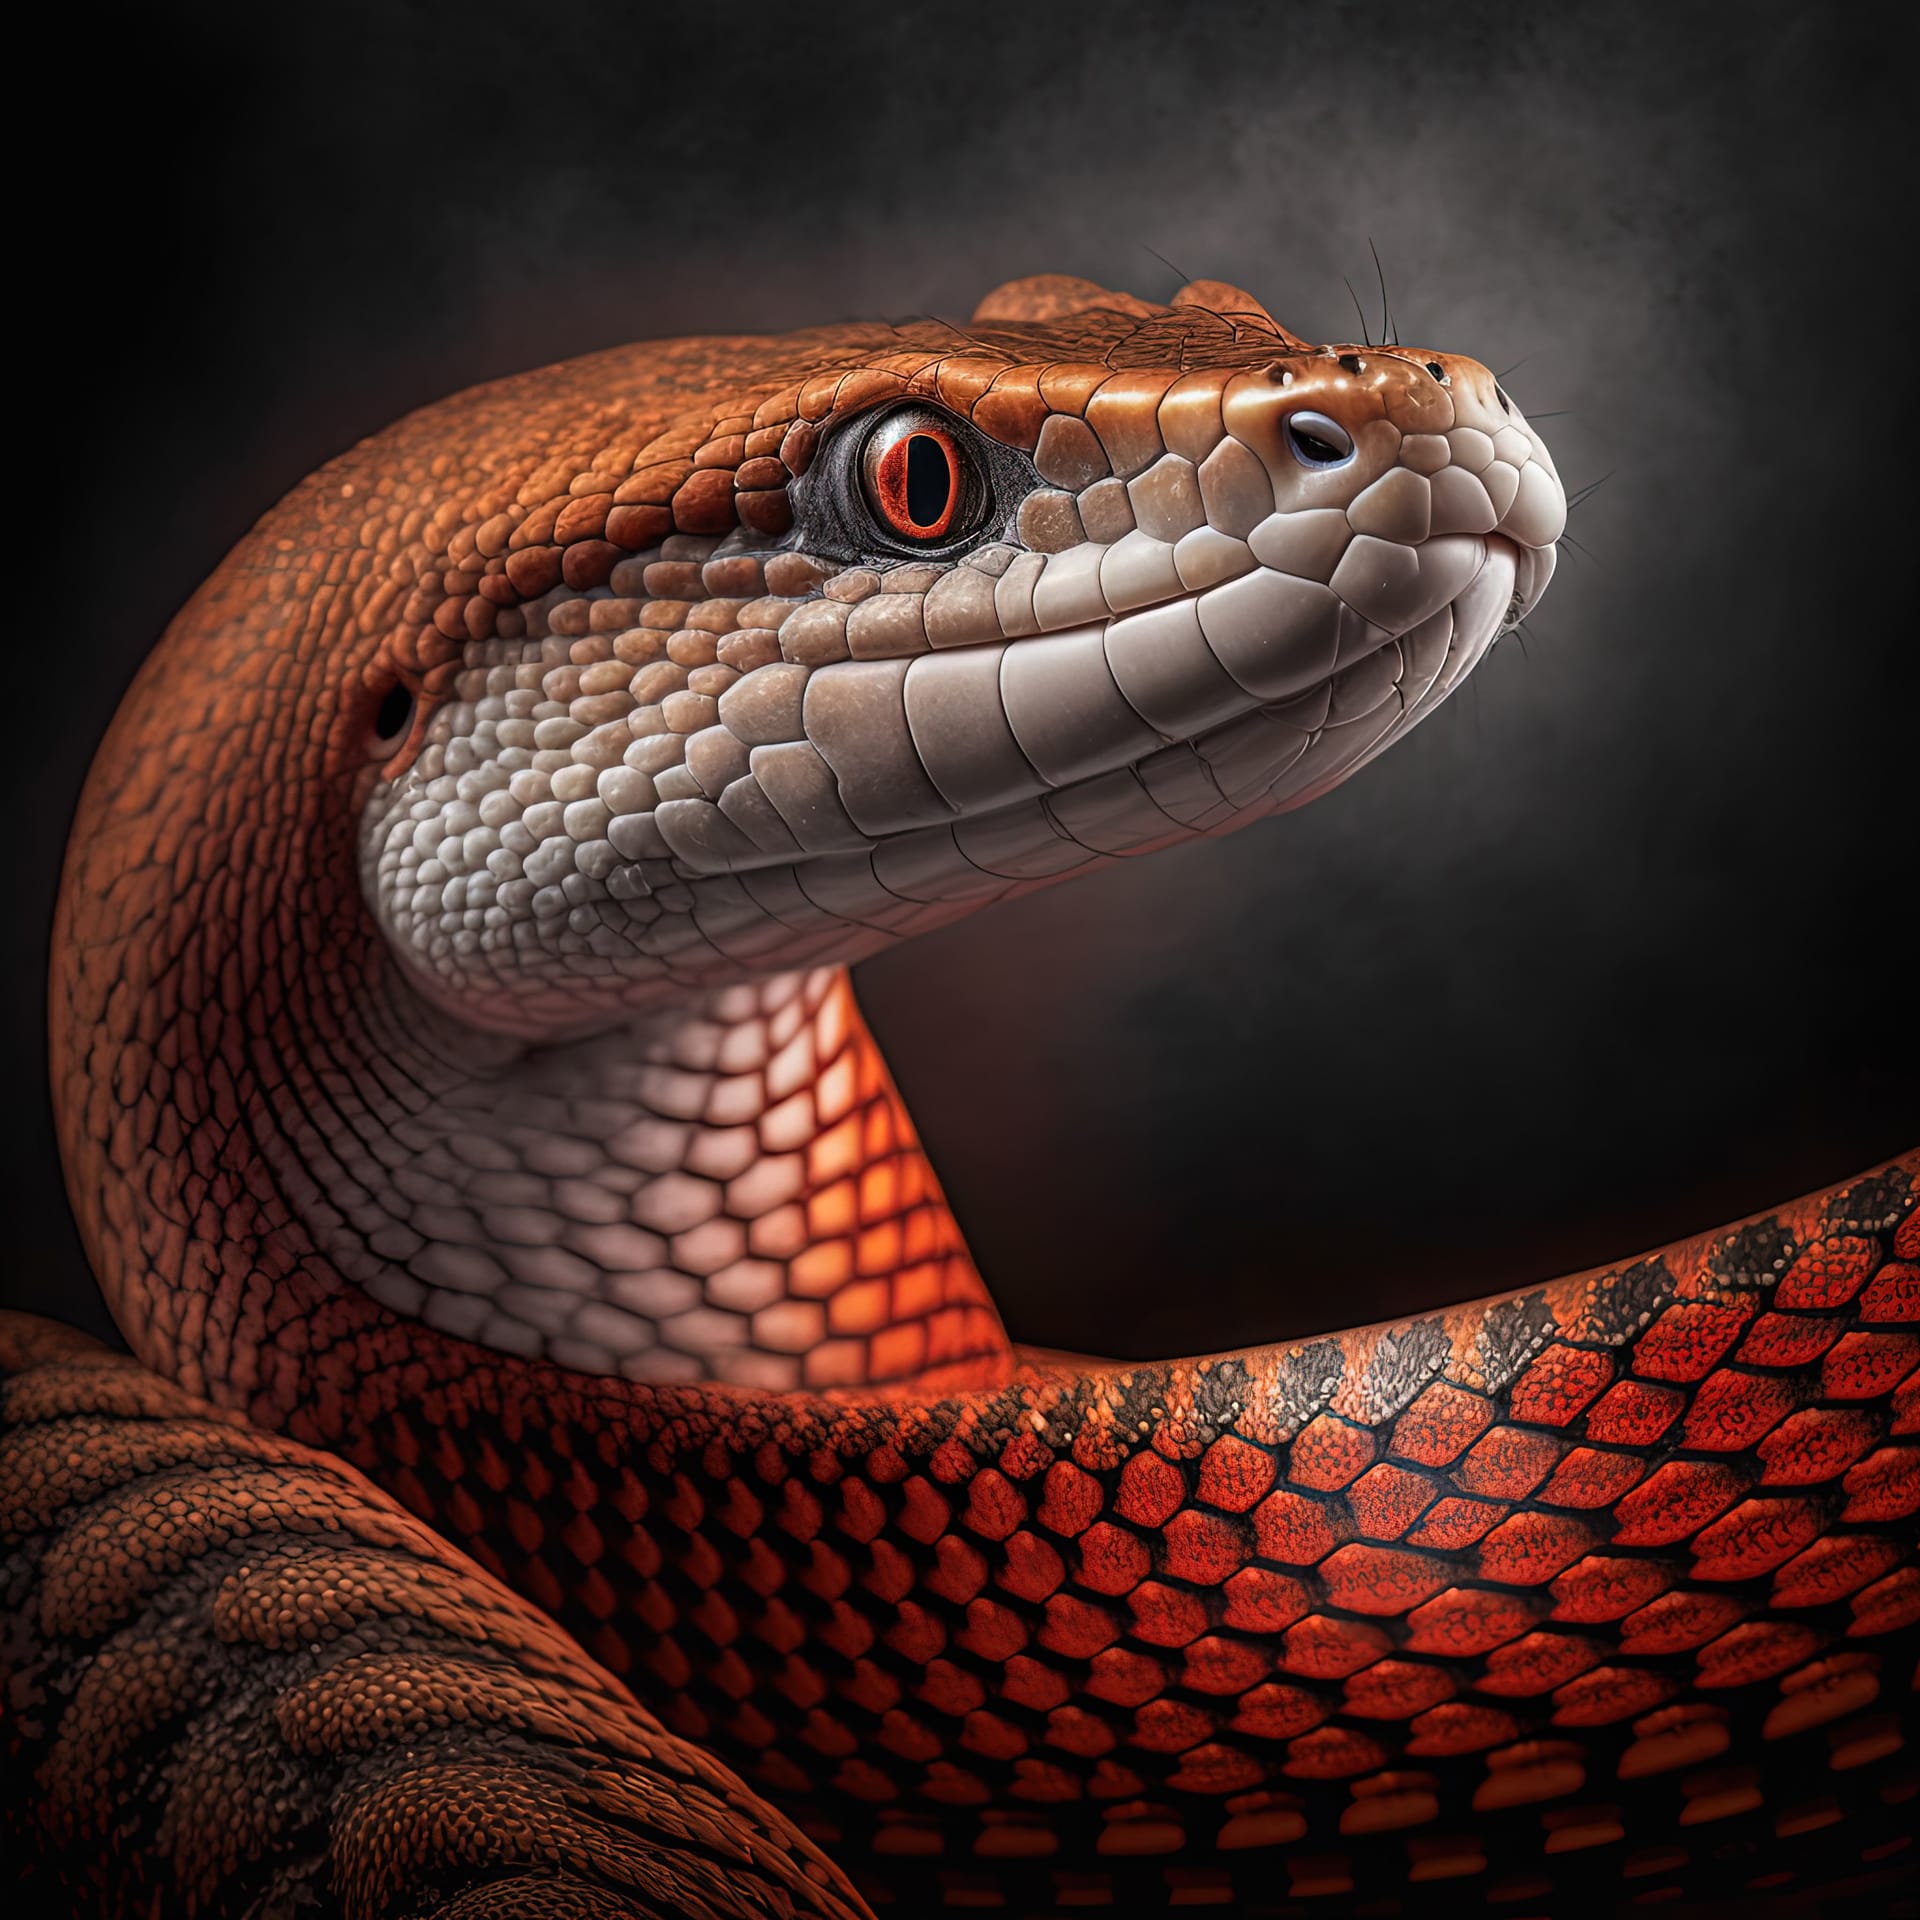 Snake portrait studio ultra realistic picture